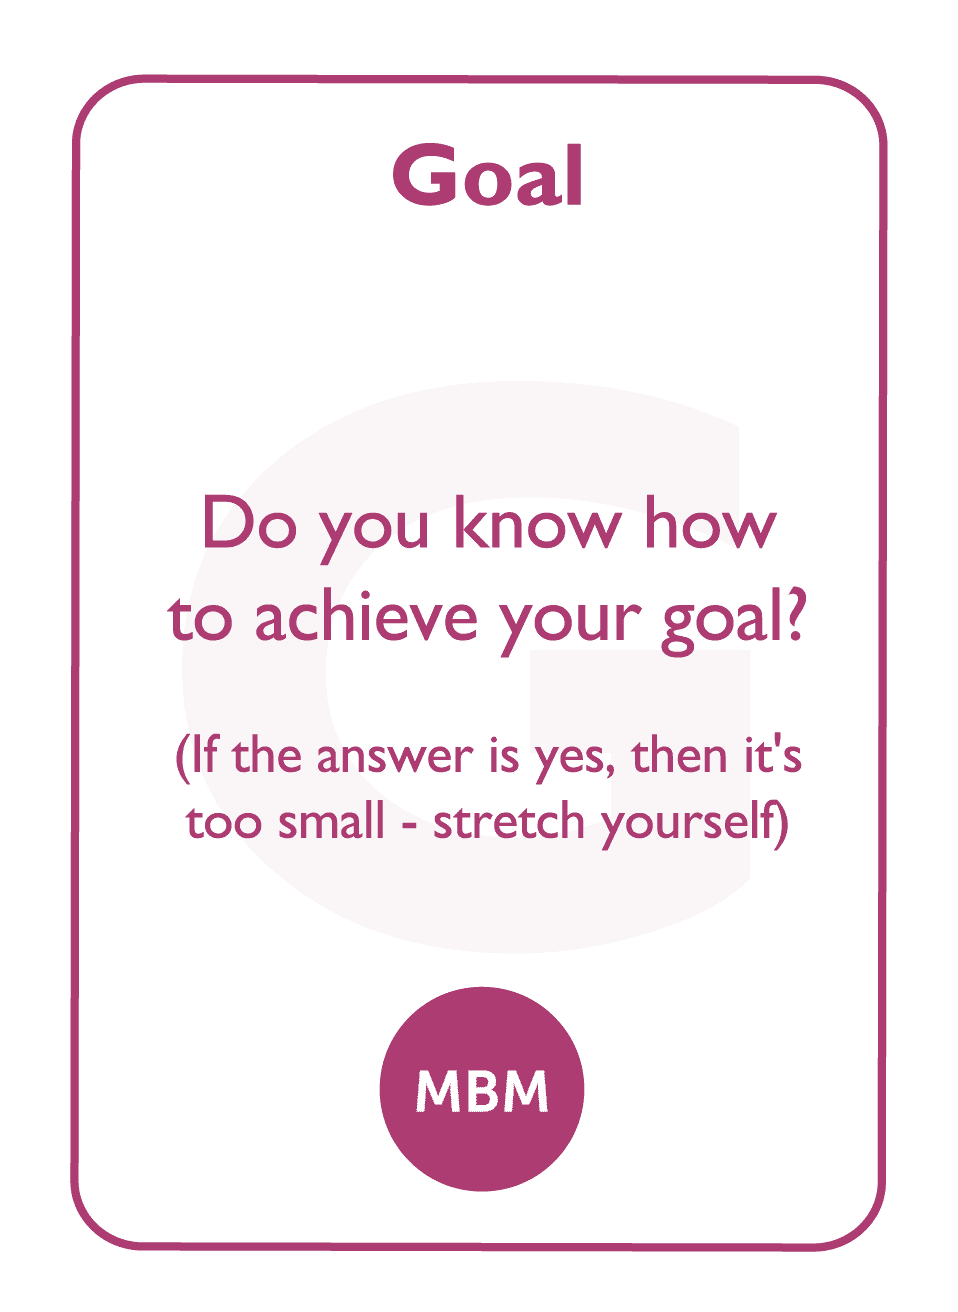 Coaching card titled Goal